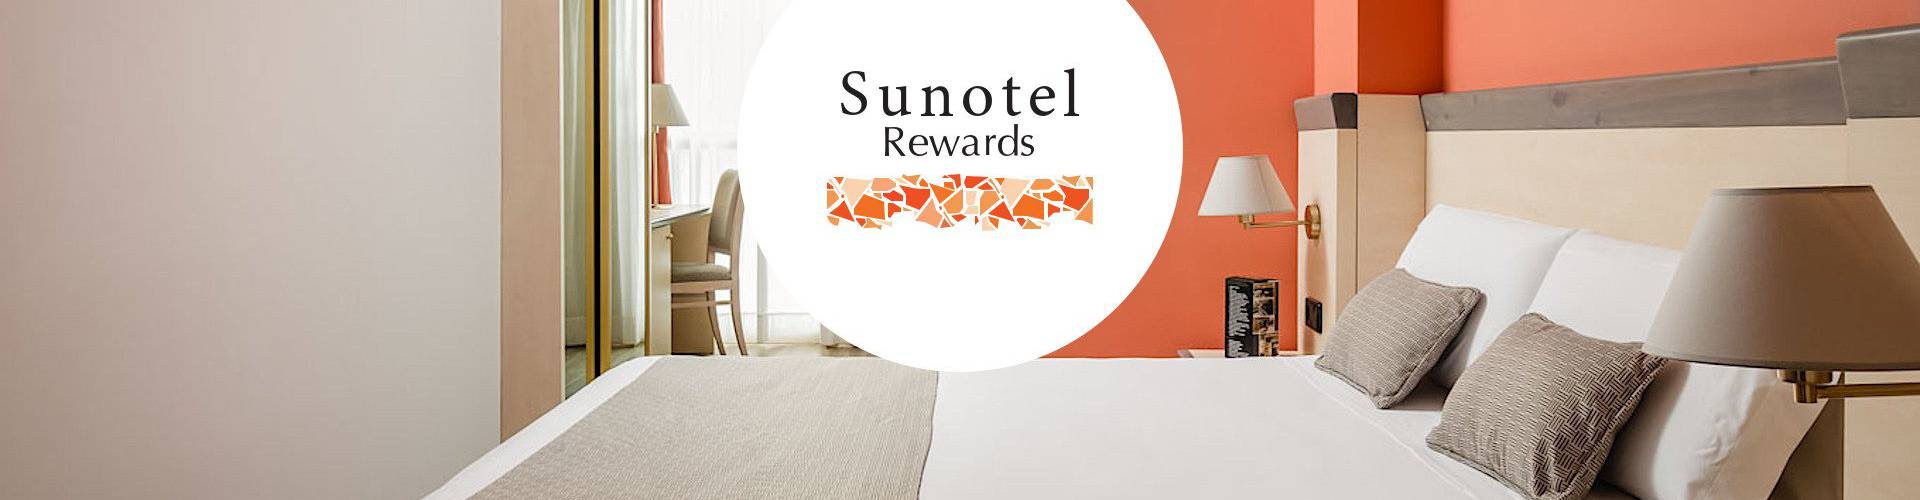 Sunotel -  - Sunotel Hotels